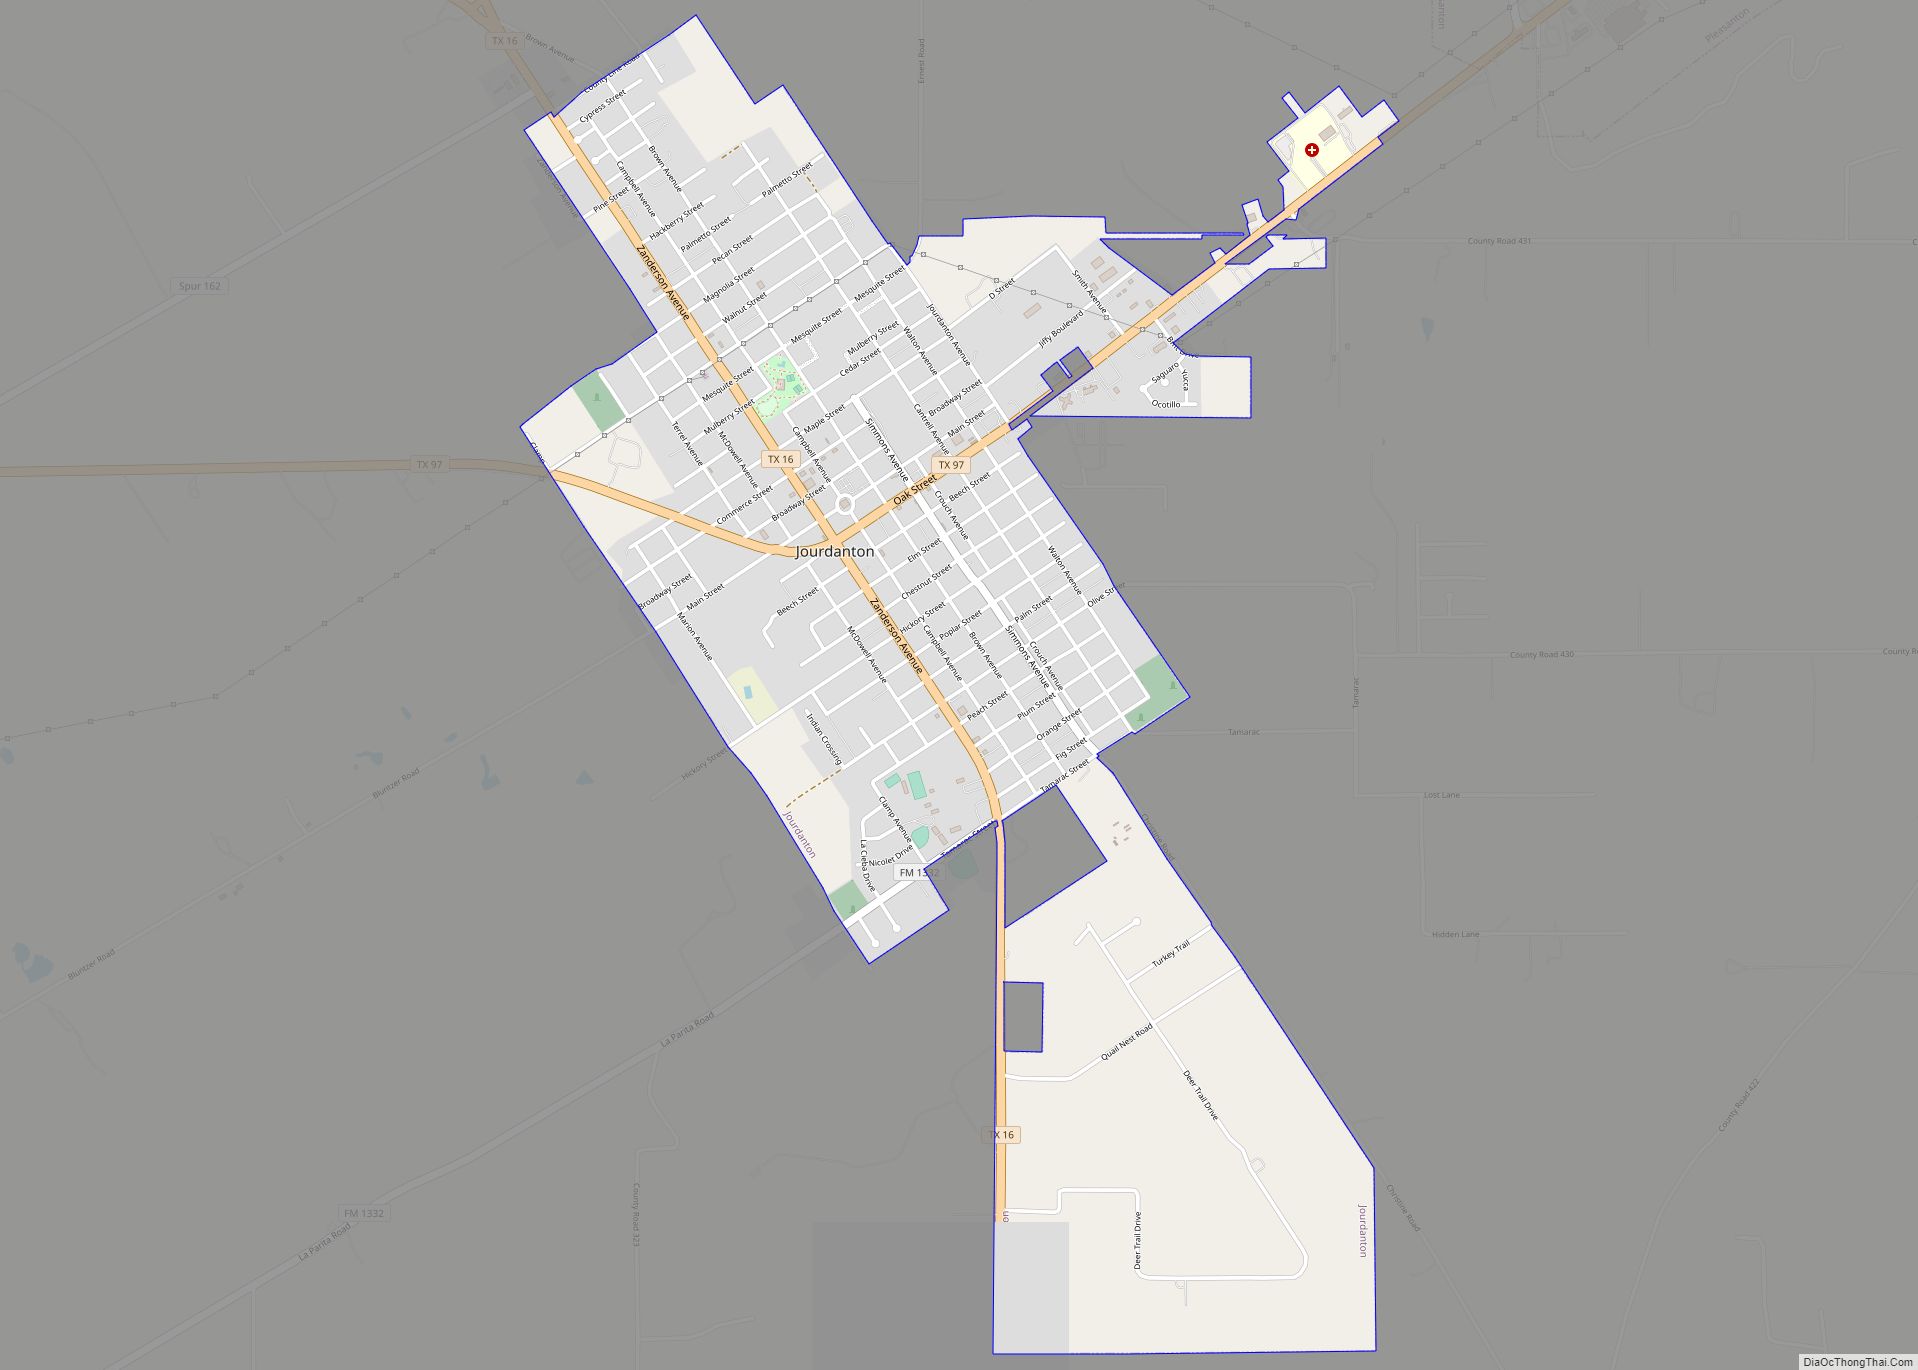 Map of Jourdanton city